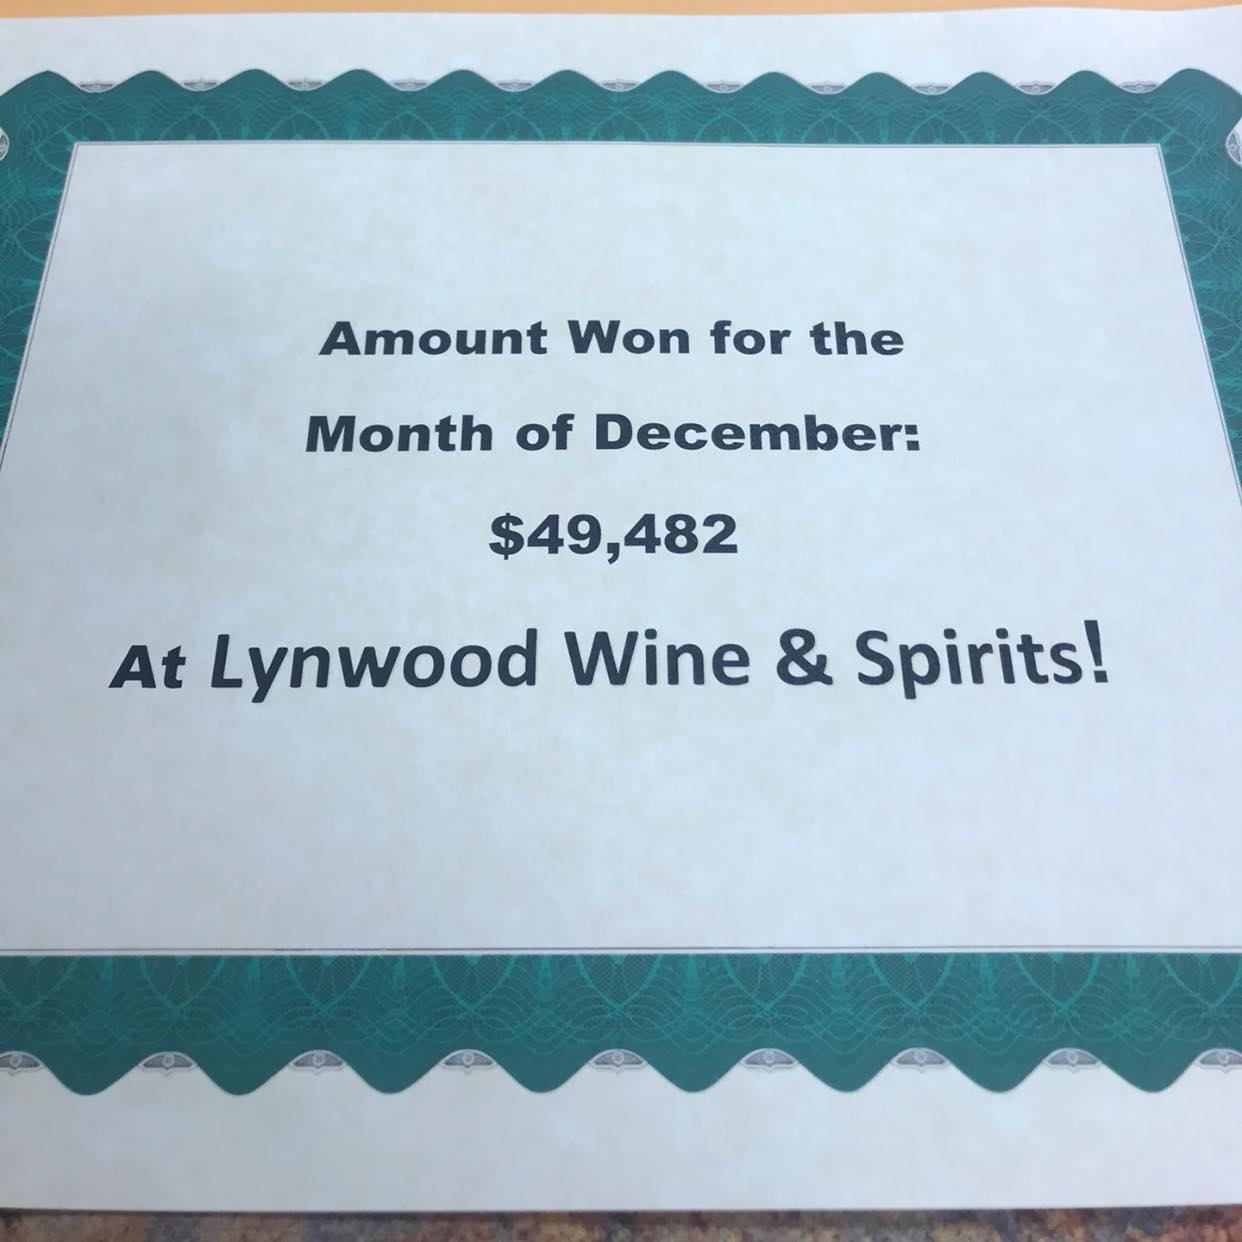 Lynwood Wine & Spirits